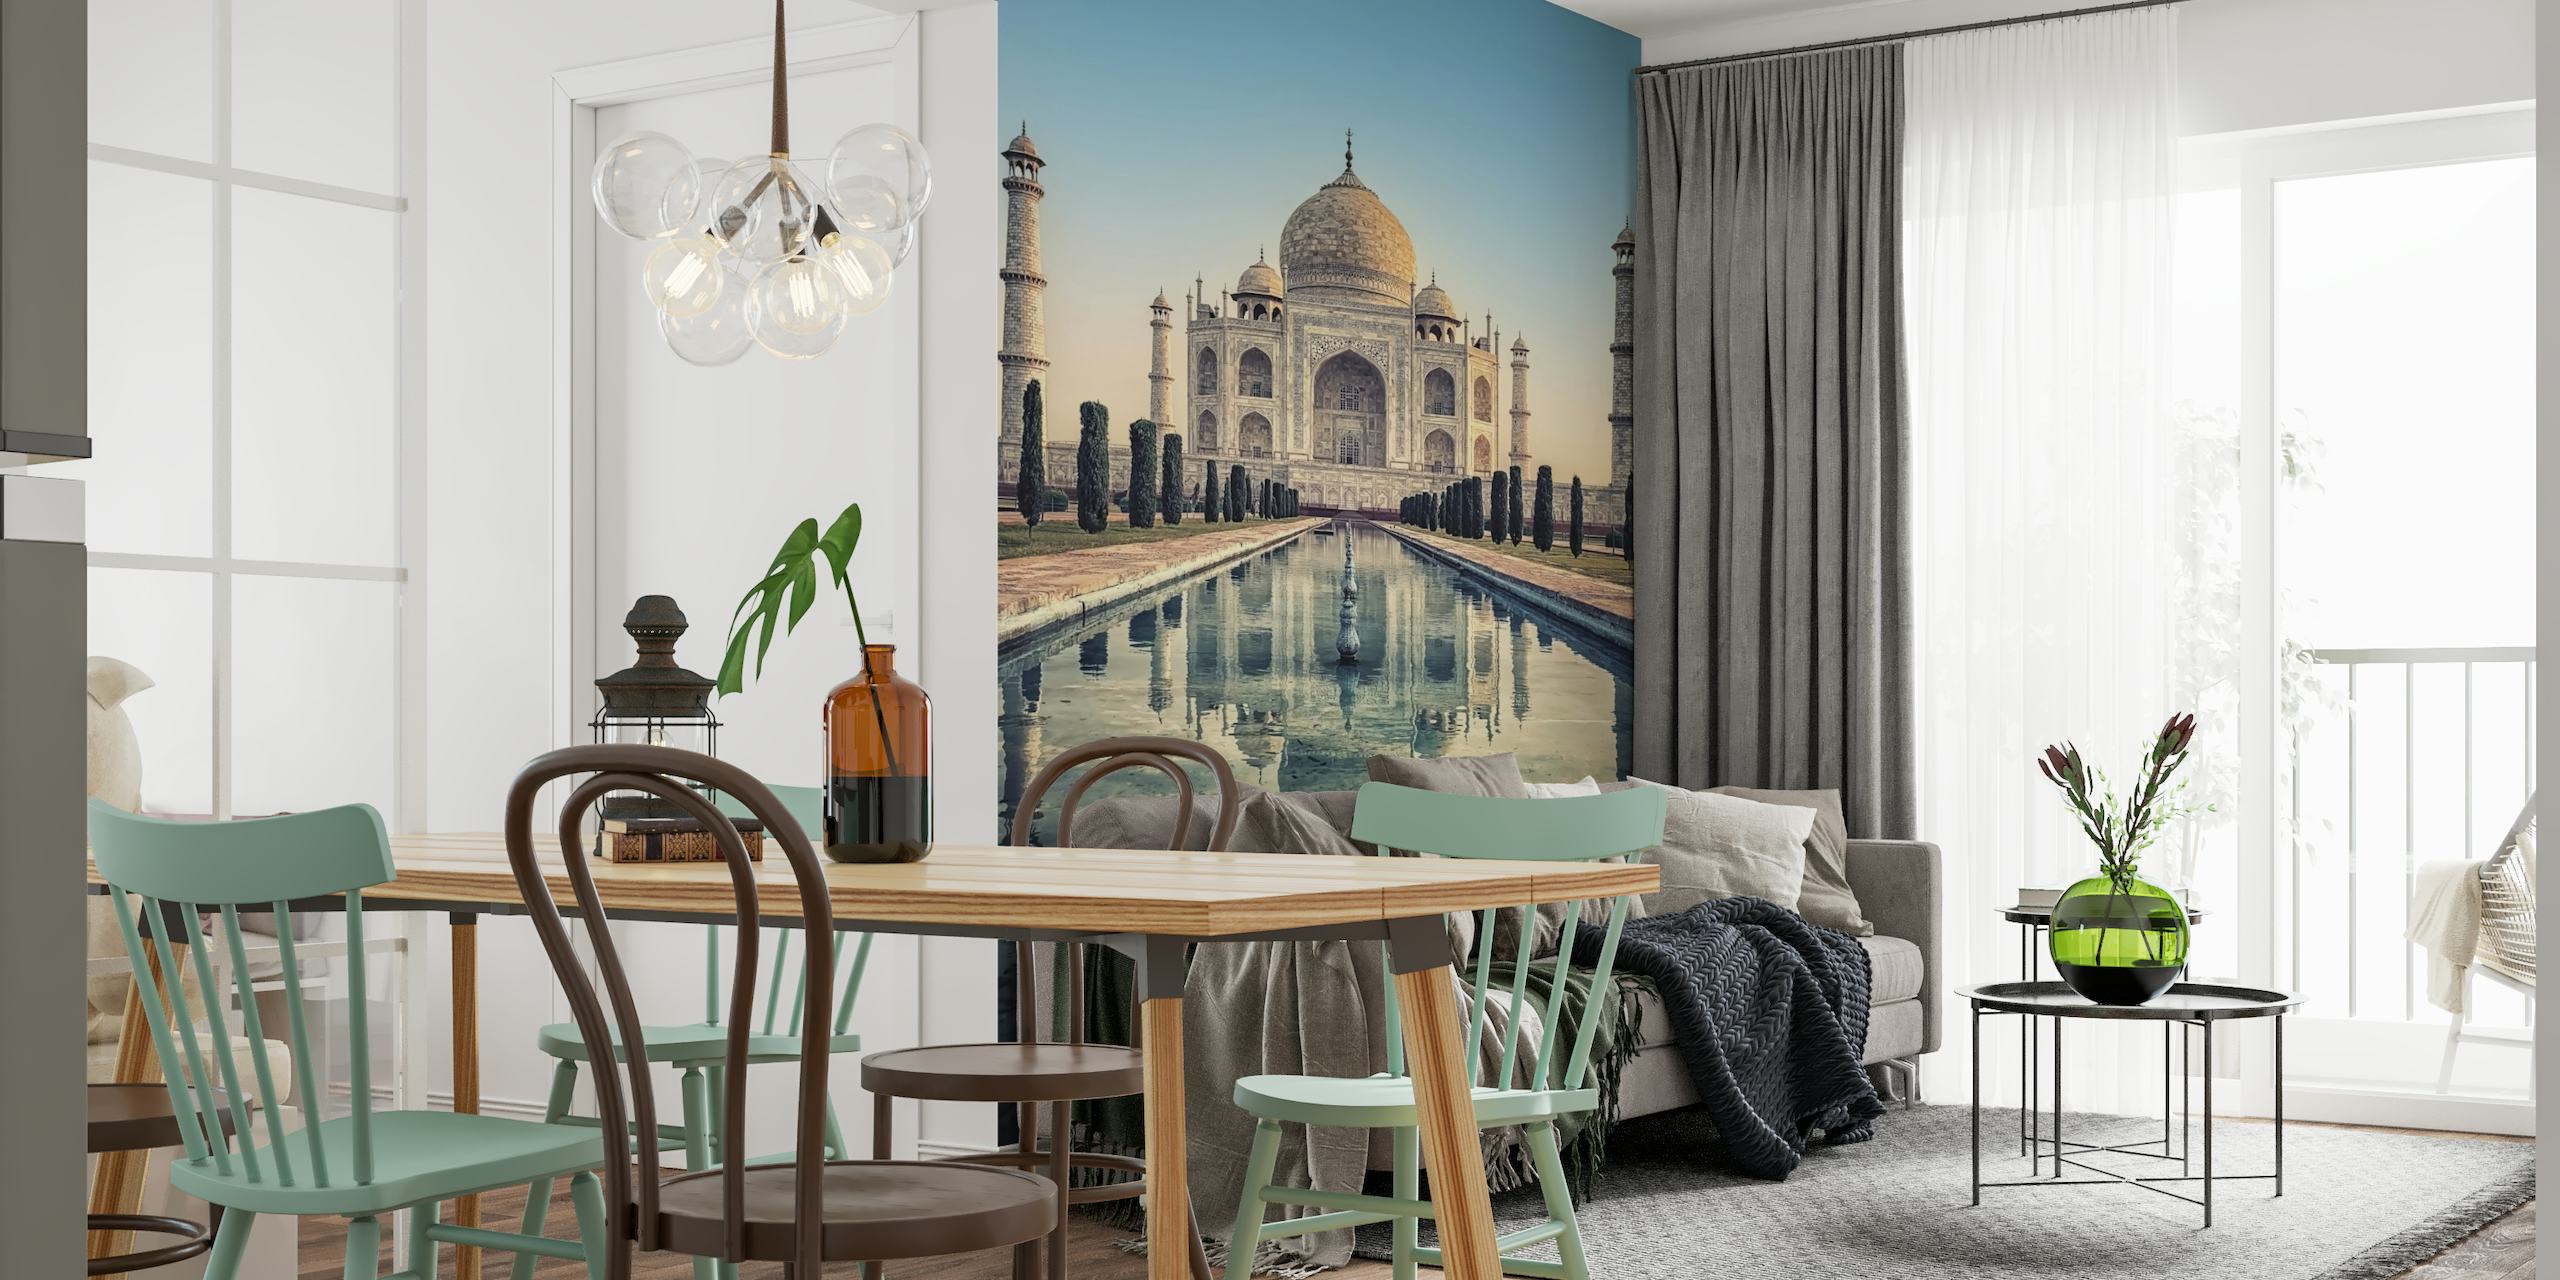 Taj Mahal Reflection papel pintado